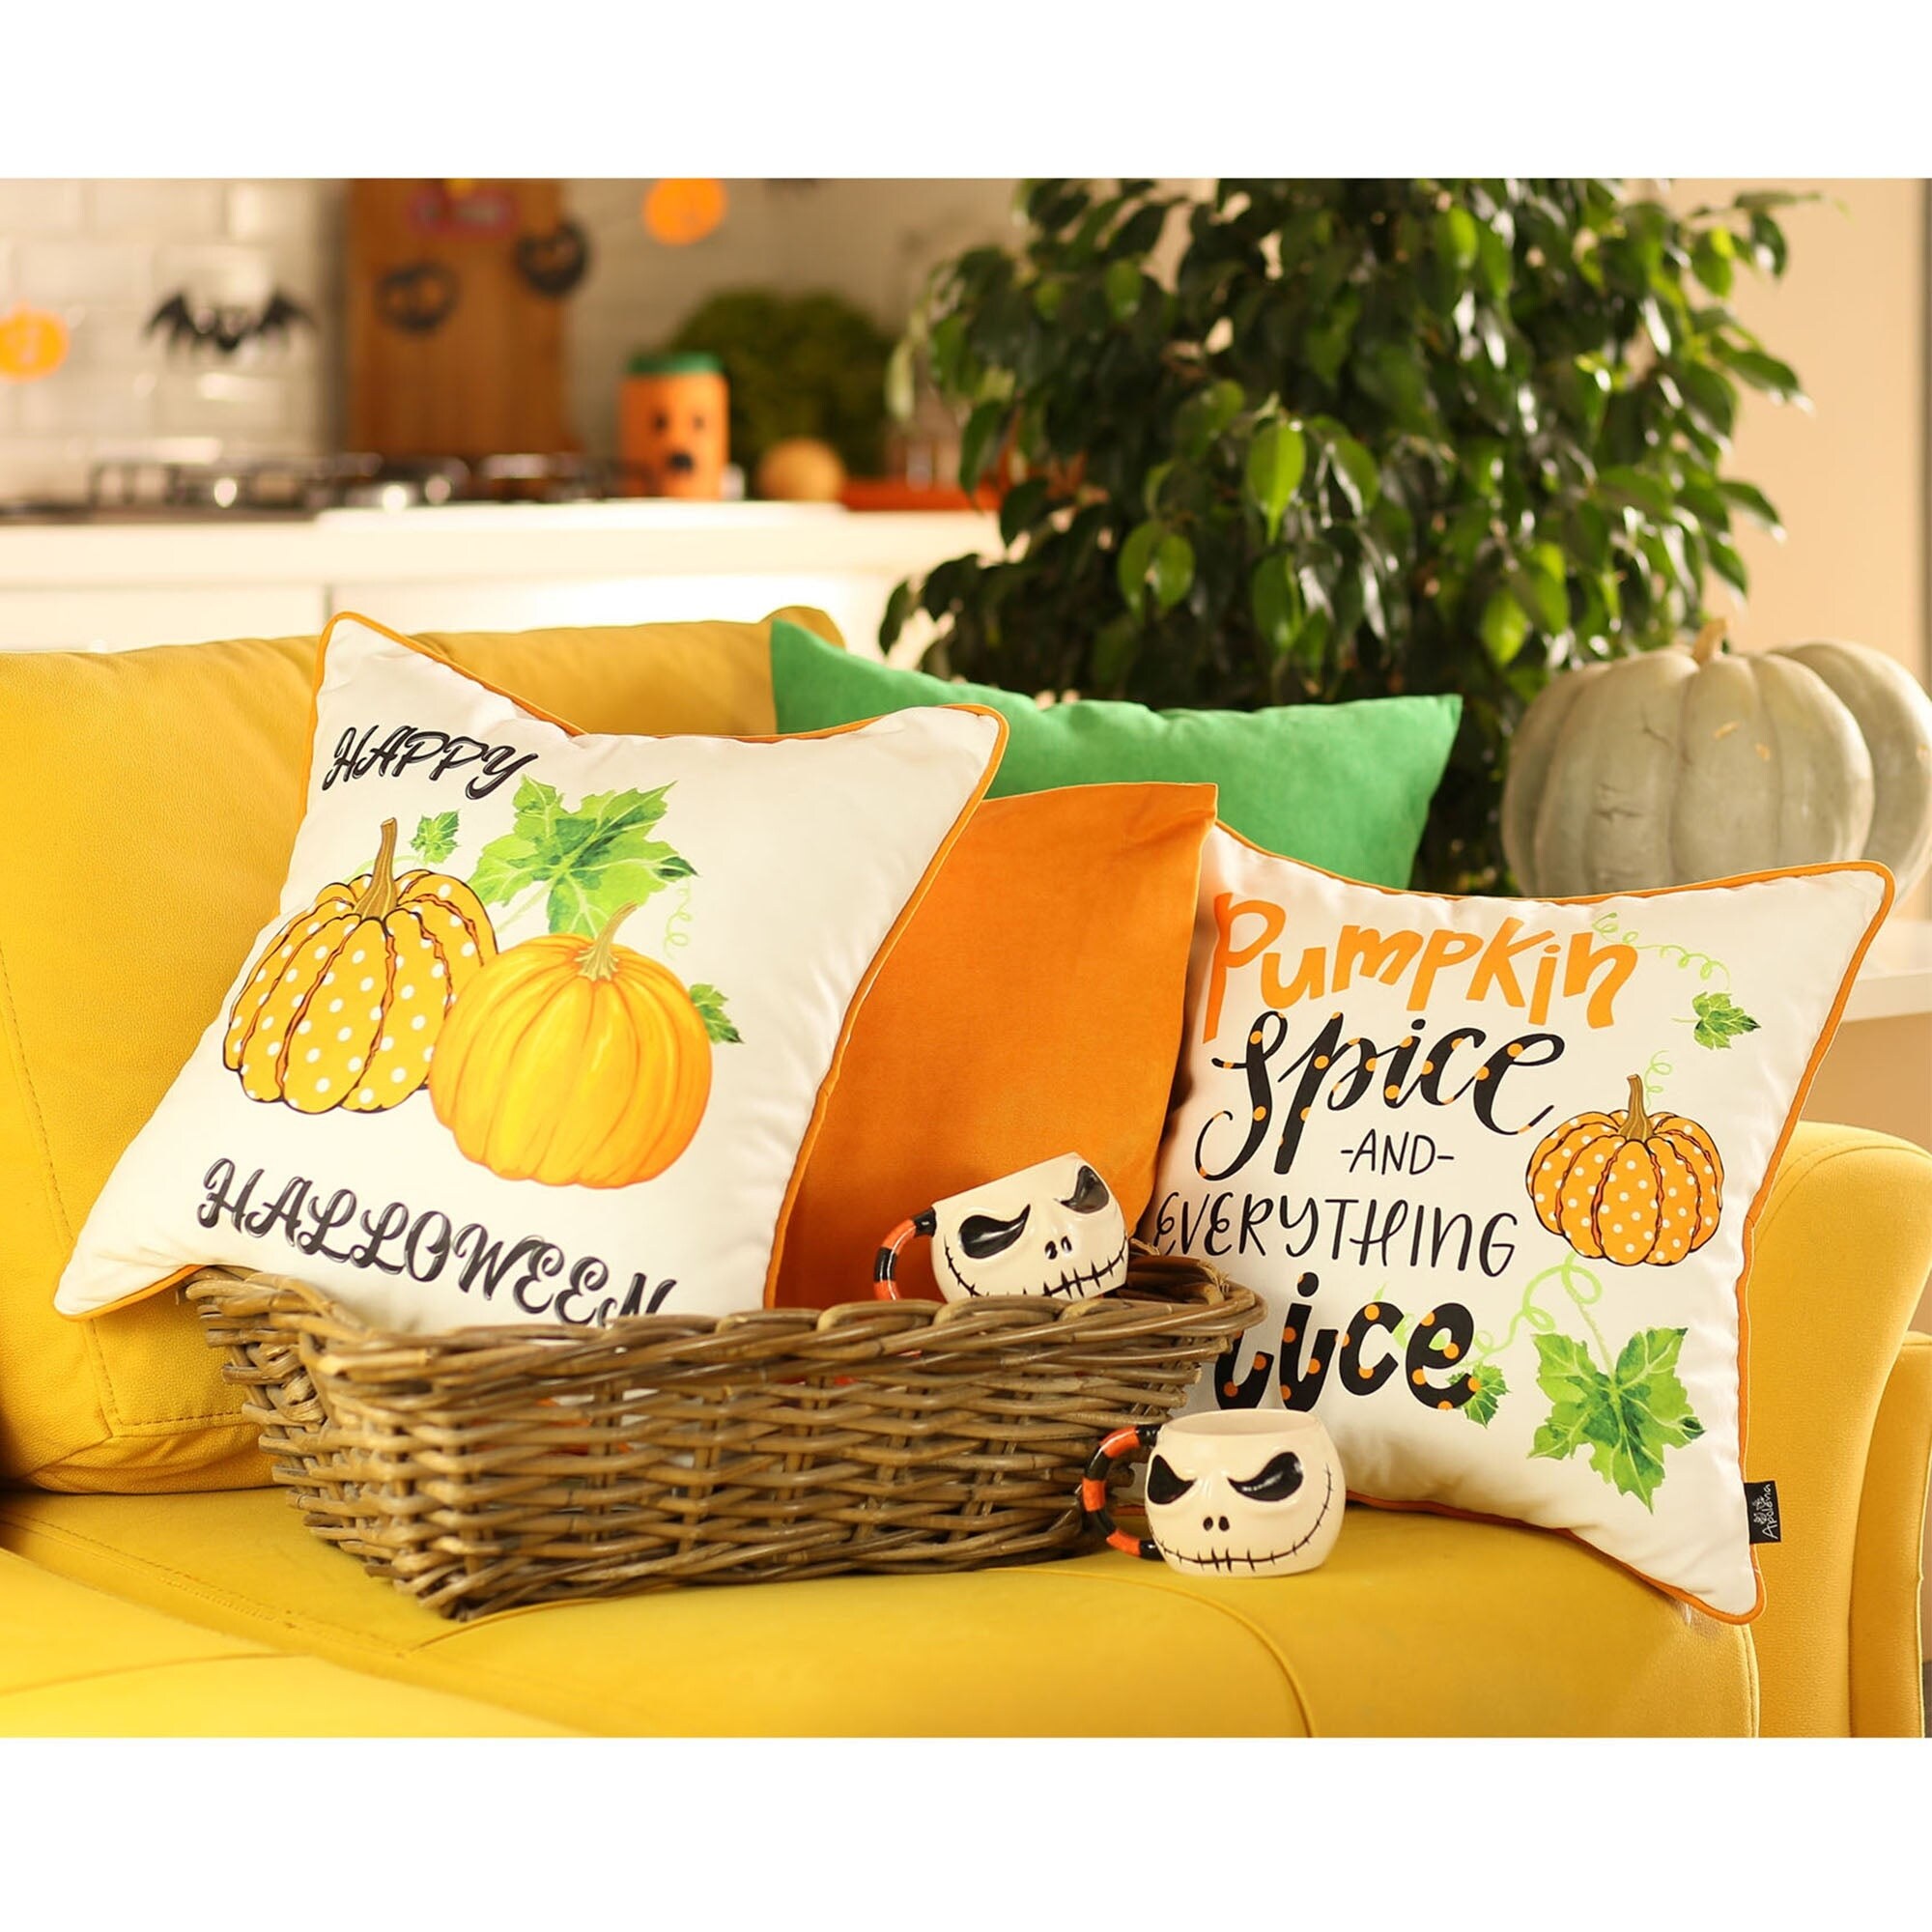 Glitzhome Fall Decor 18x18 Cotton Embroidered Pumpkin Pillow Cover, Indoor  Use, White, Hidden Zipper